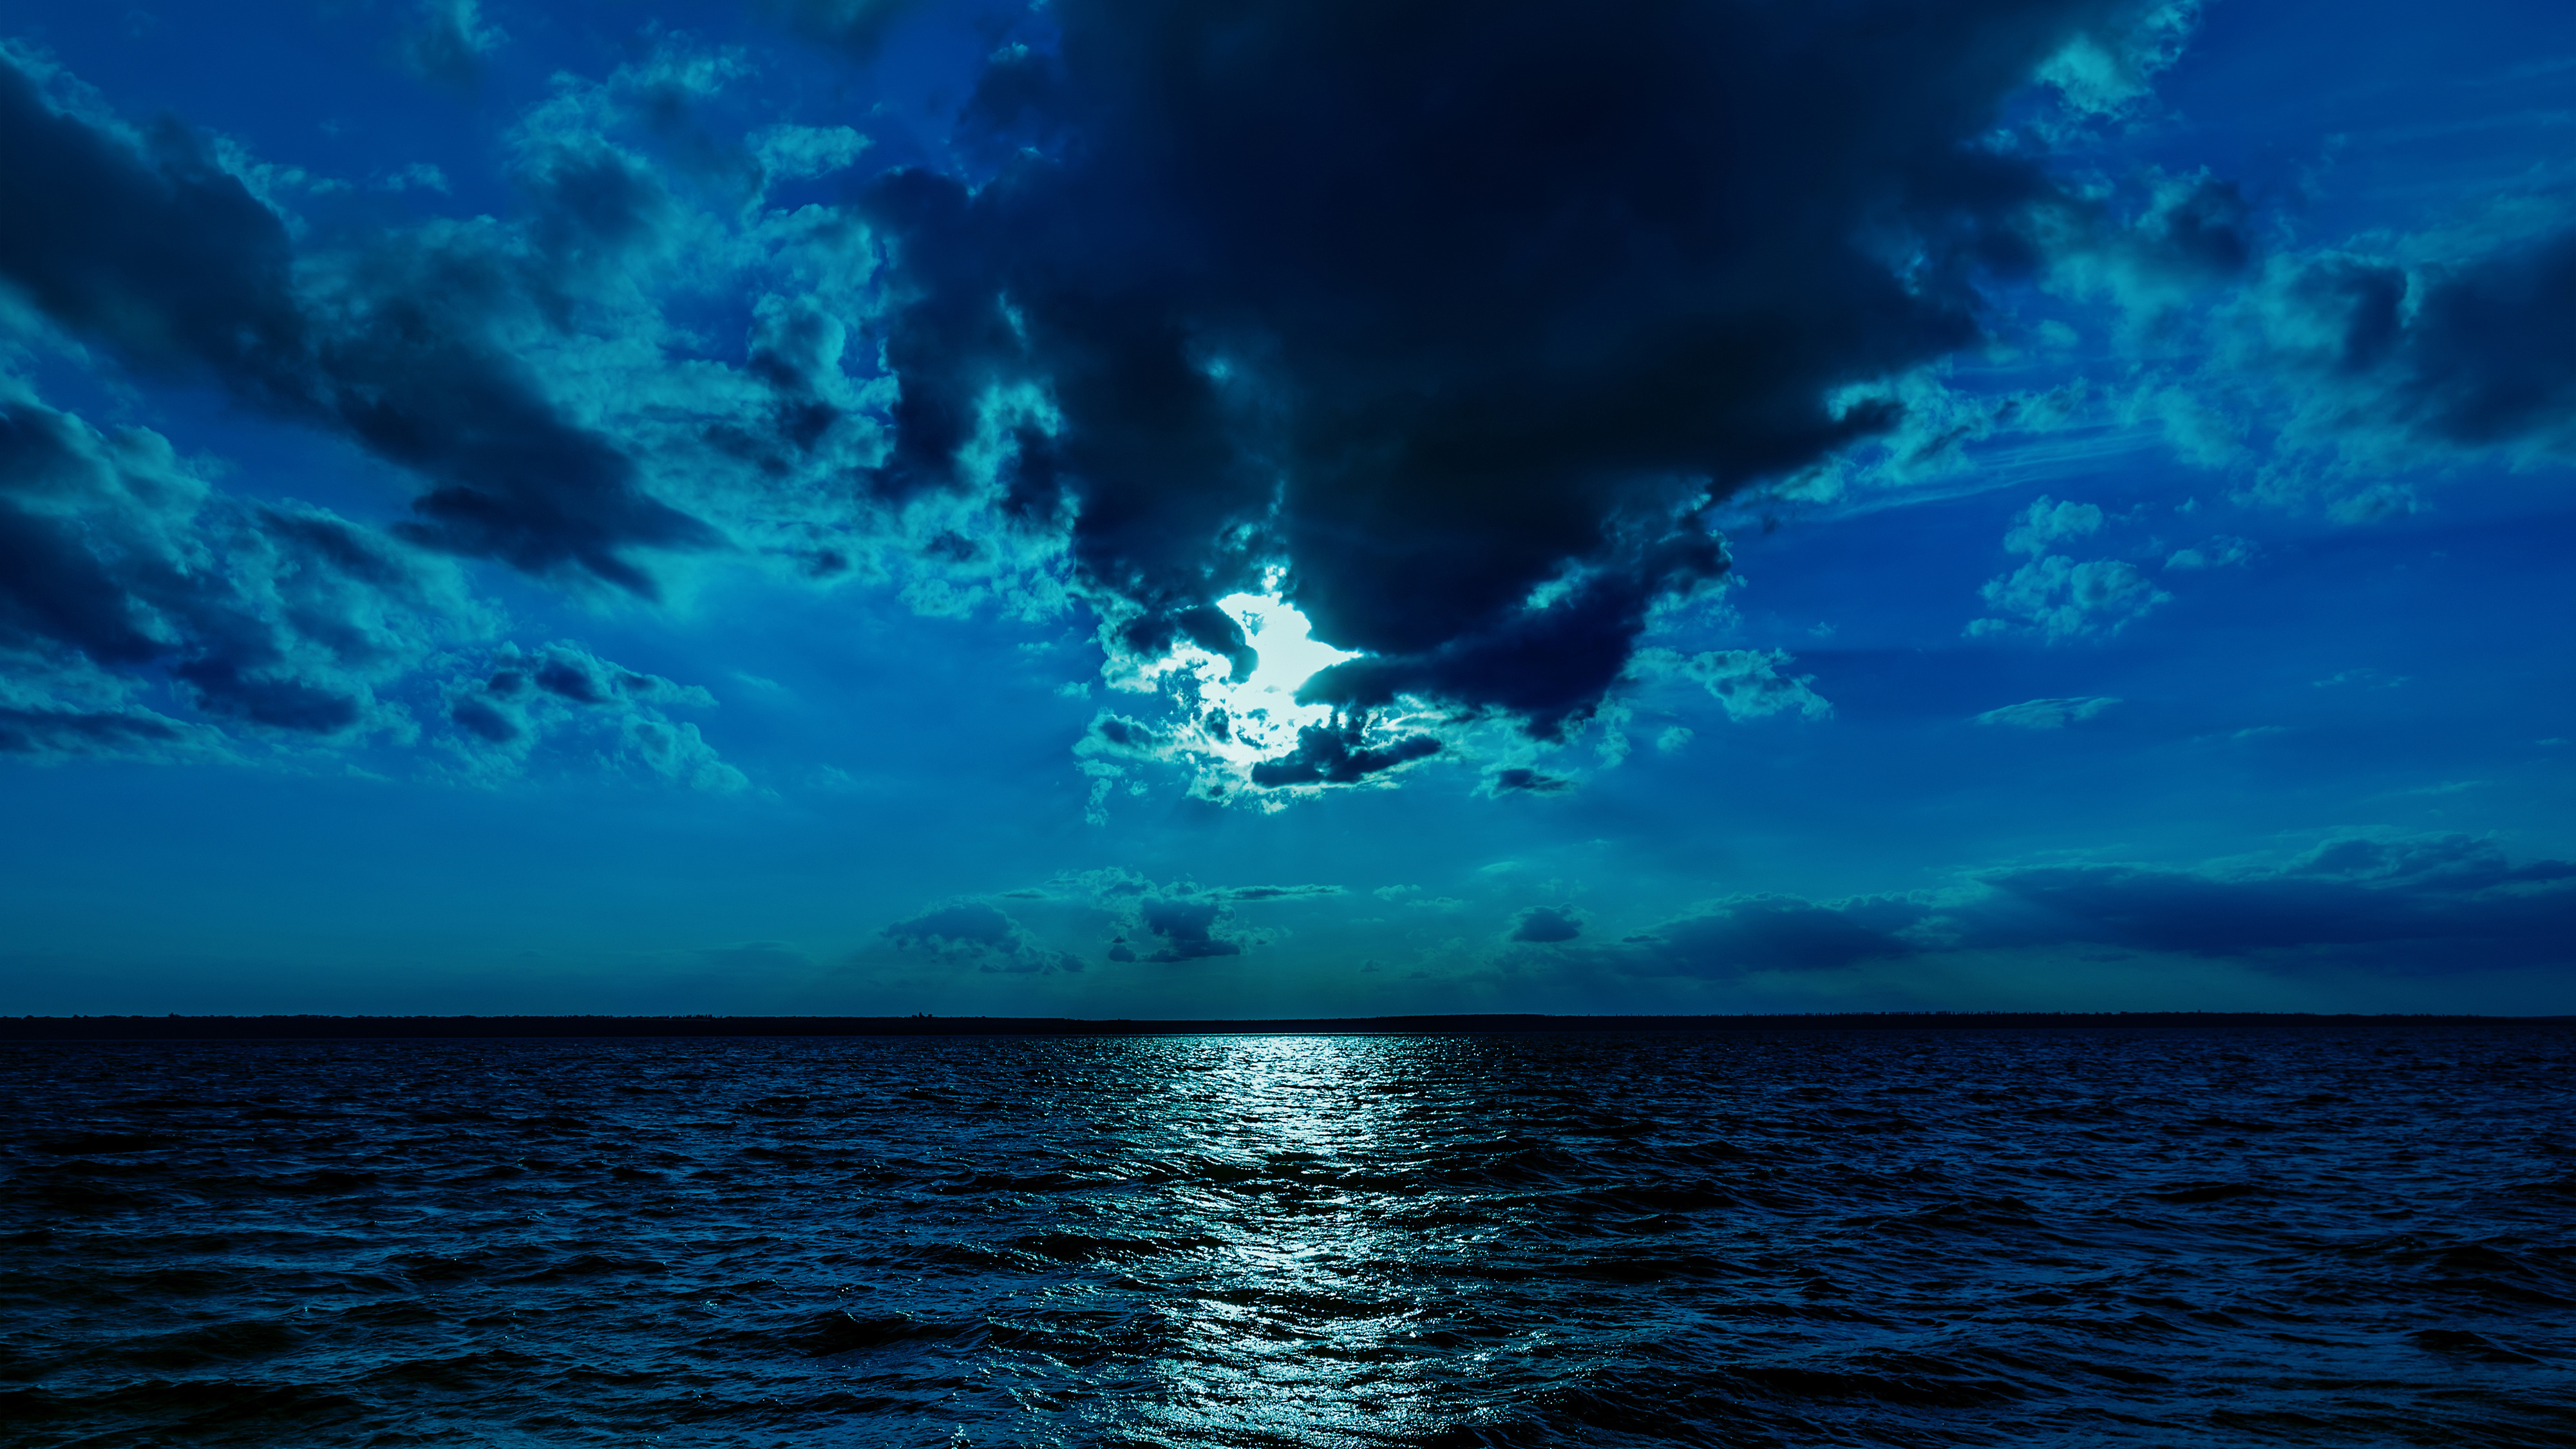 Night Moon Sea Sky Blue 4k Wallpaper,HD Nature Wallpapers,4k Wallpapers ...